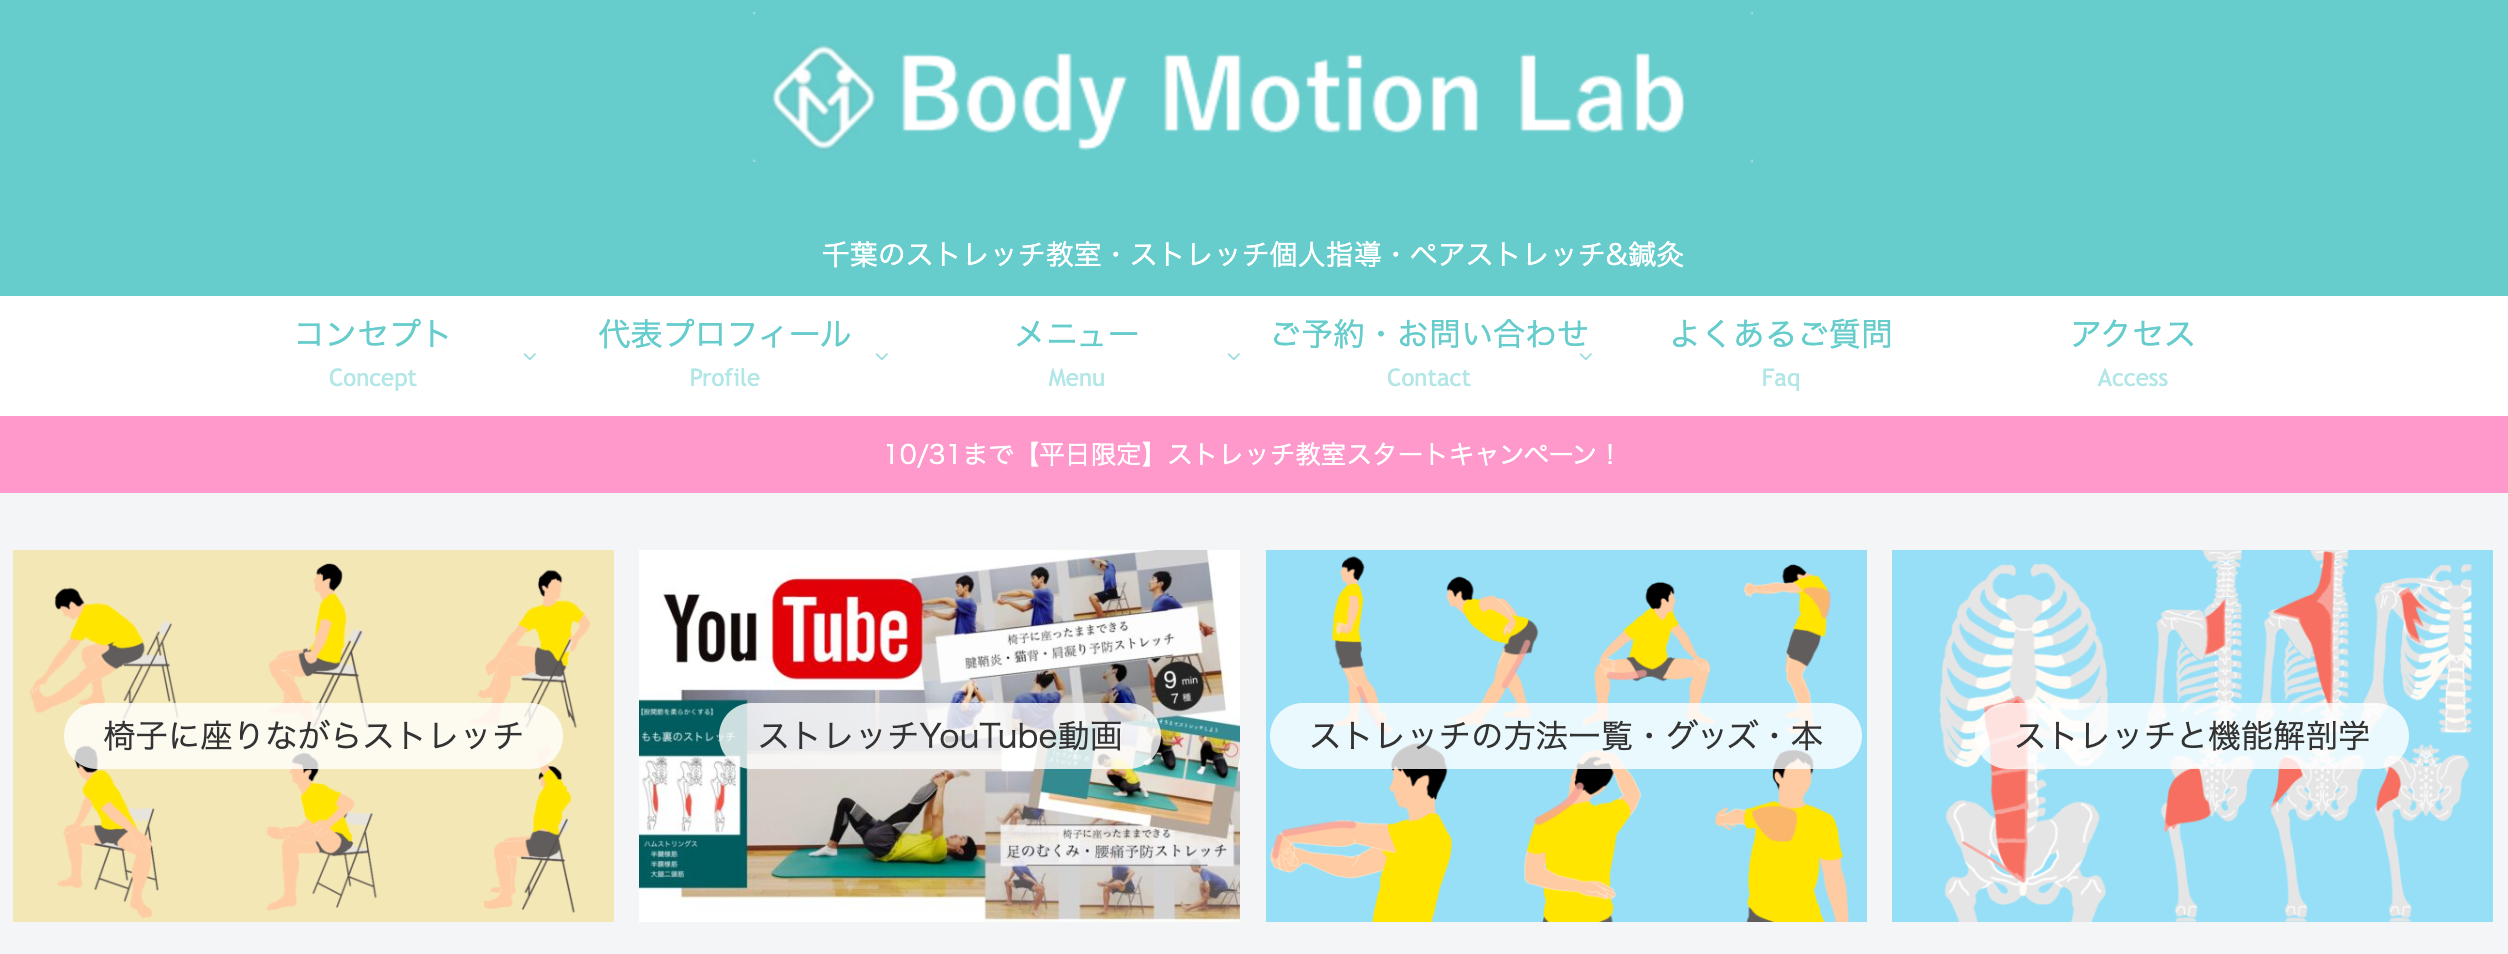 Body Motion Lab